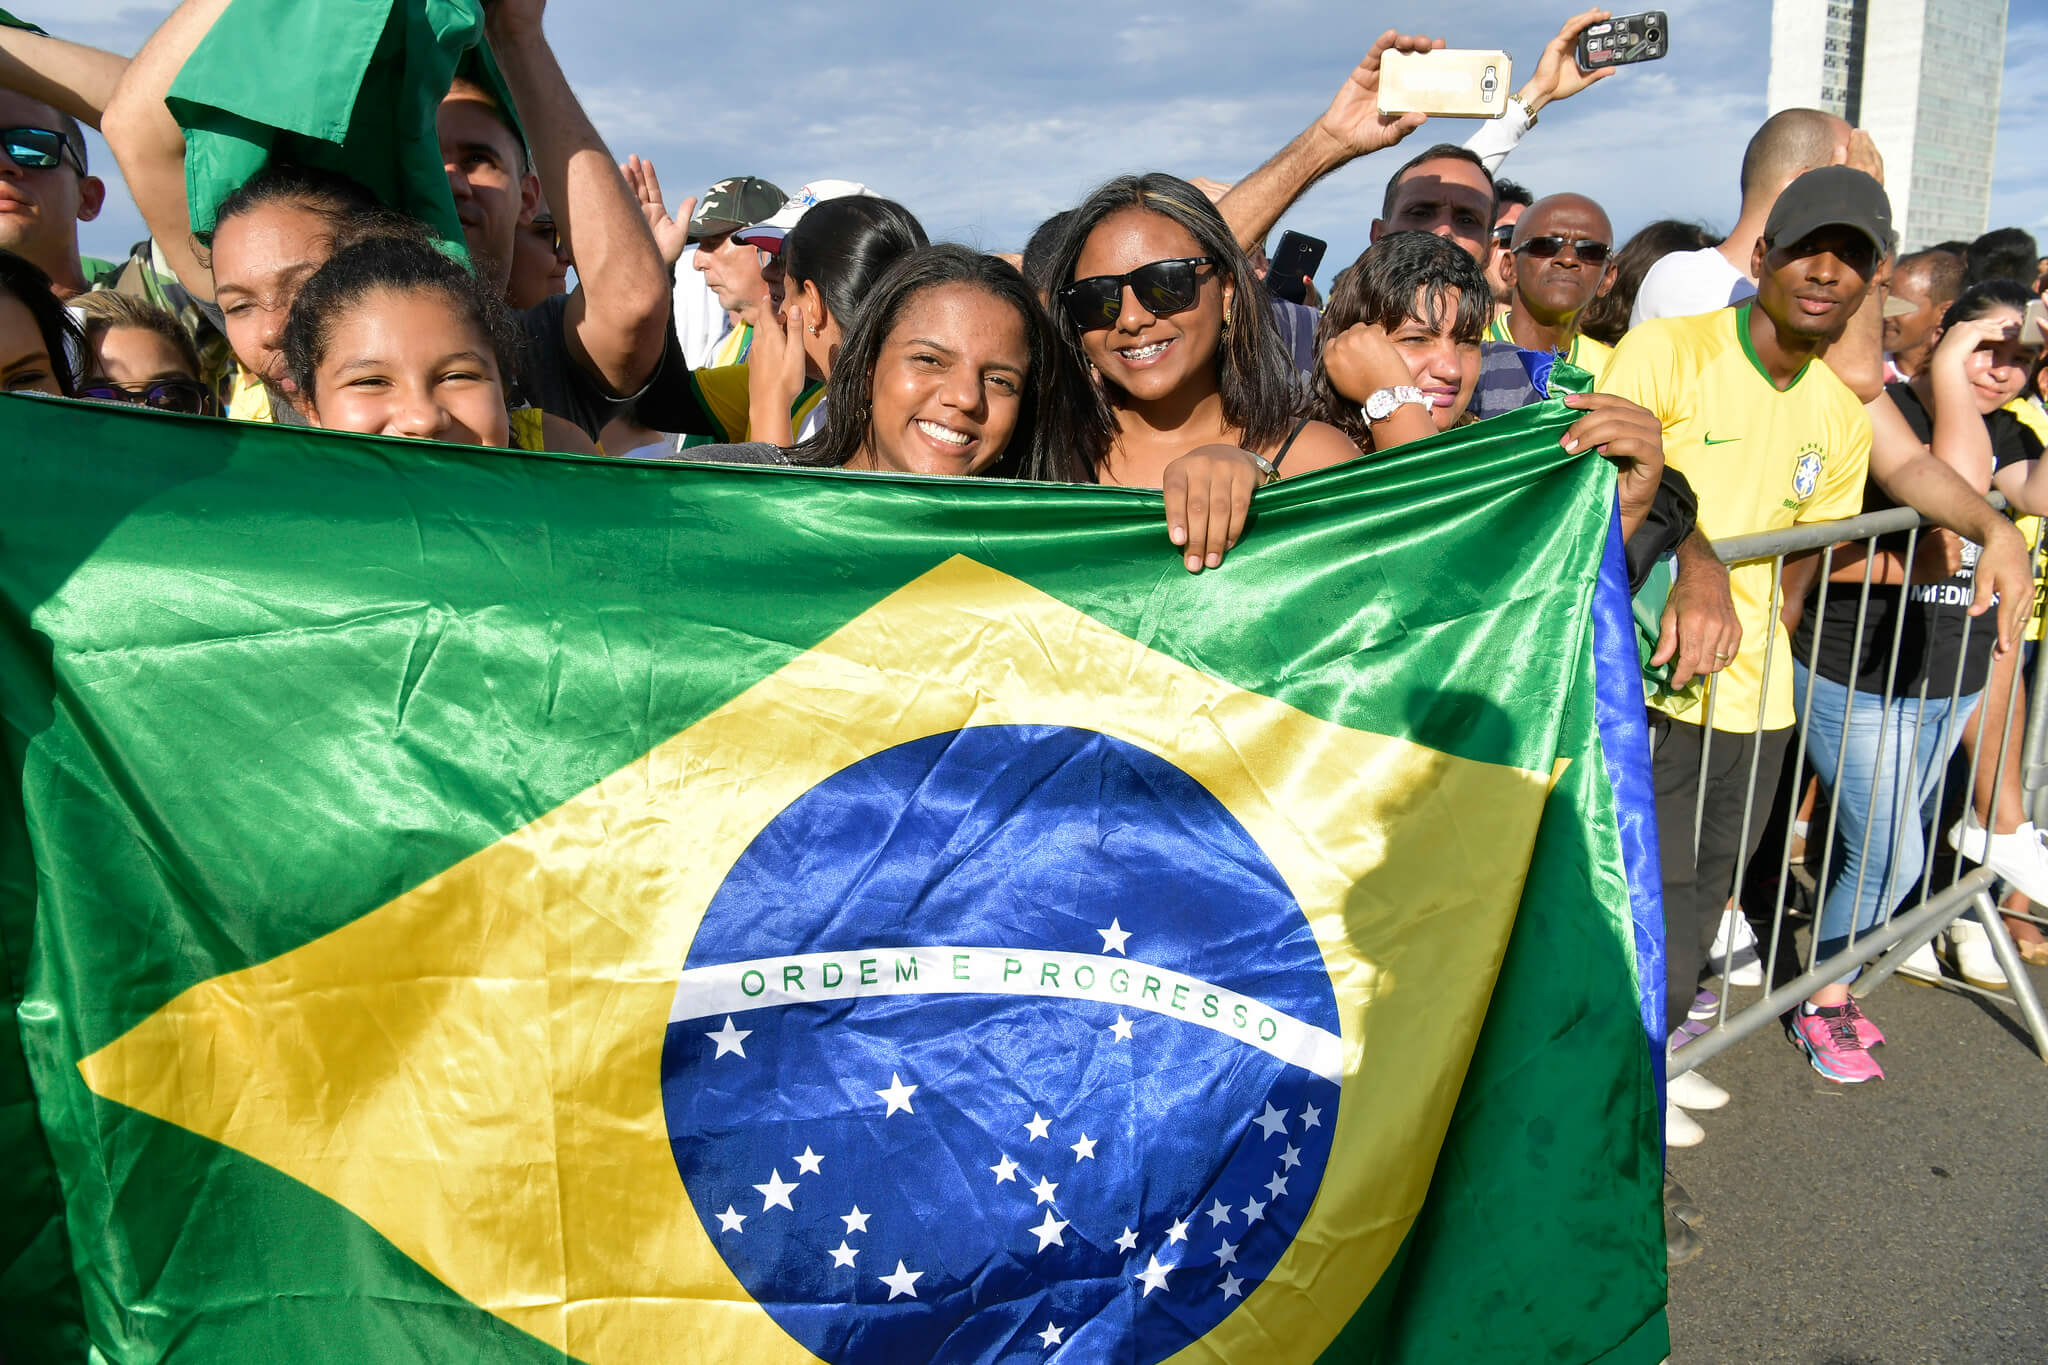 Visitors during the inauguration of president Bolsonaro on January 1st 2019 - Senado Federal